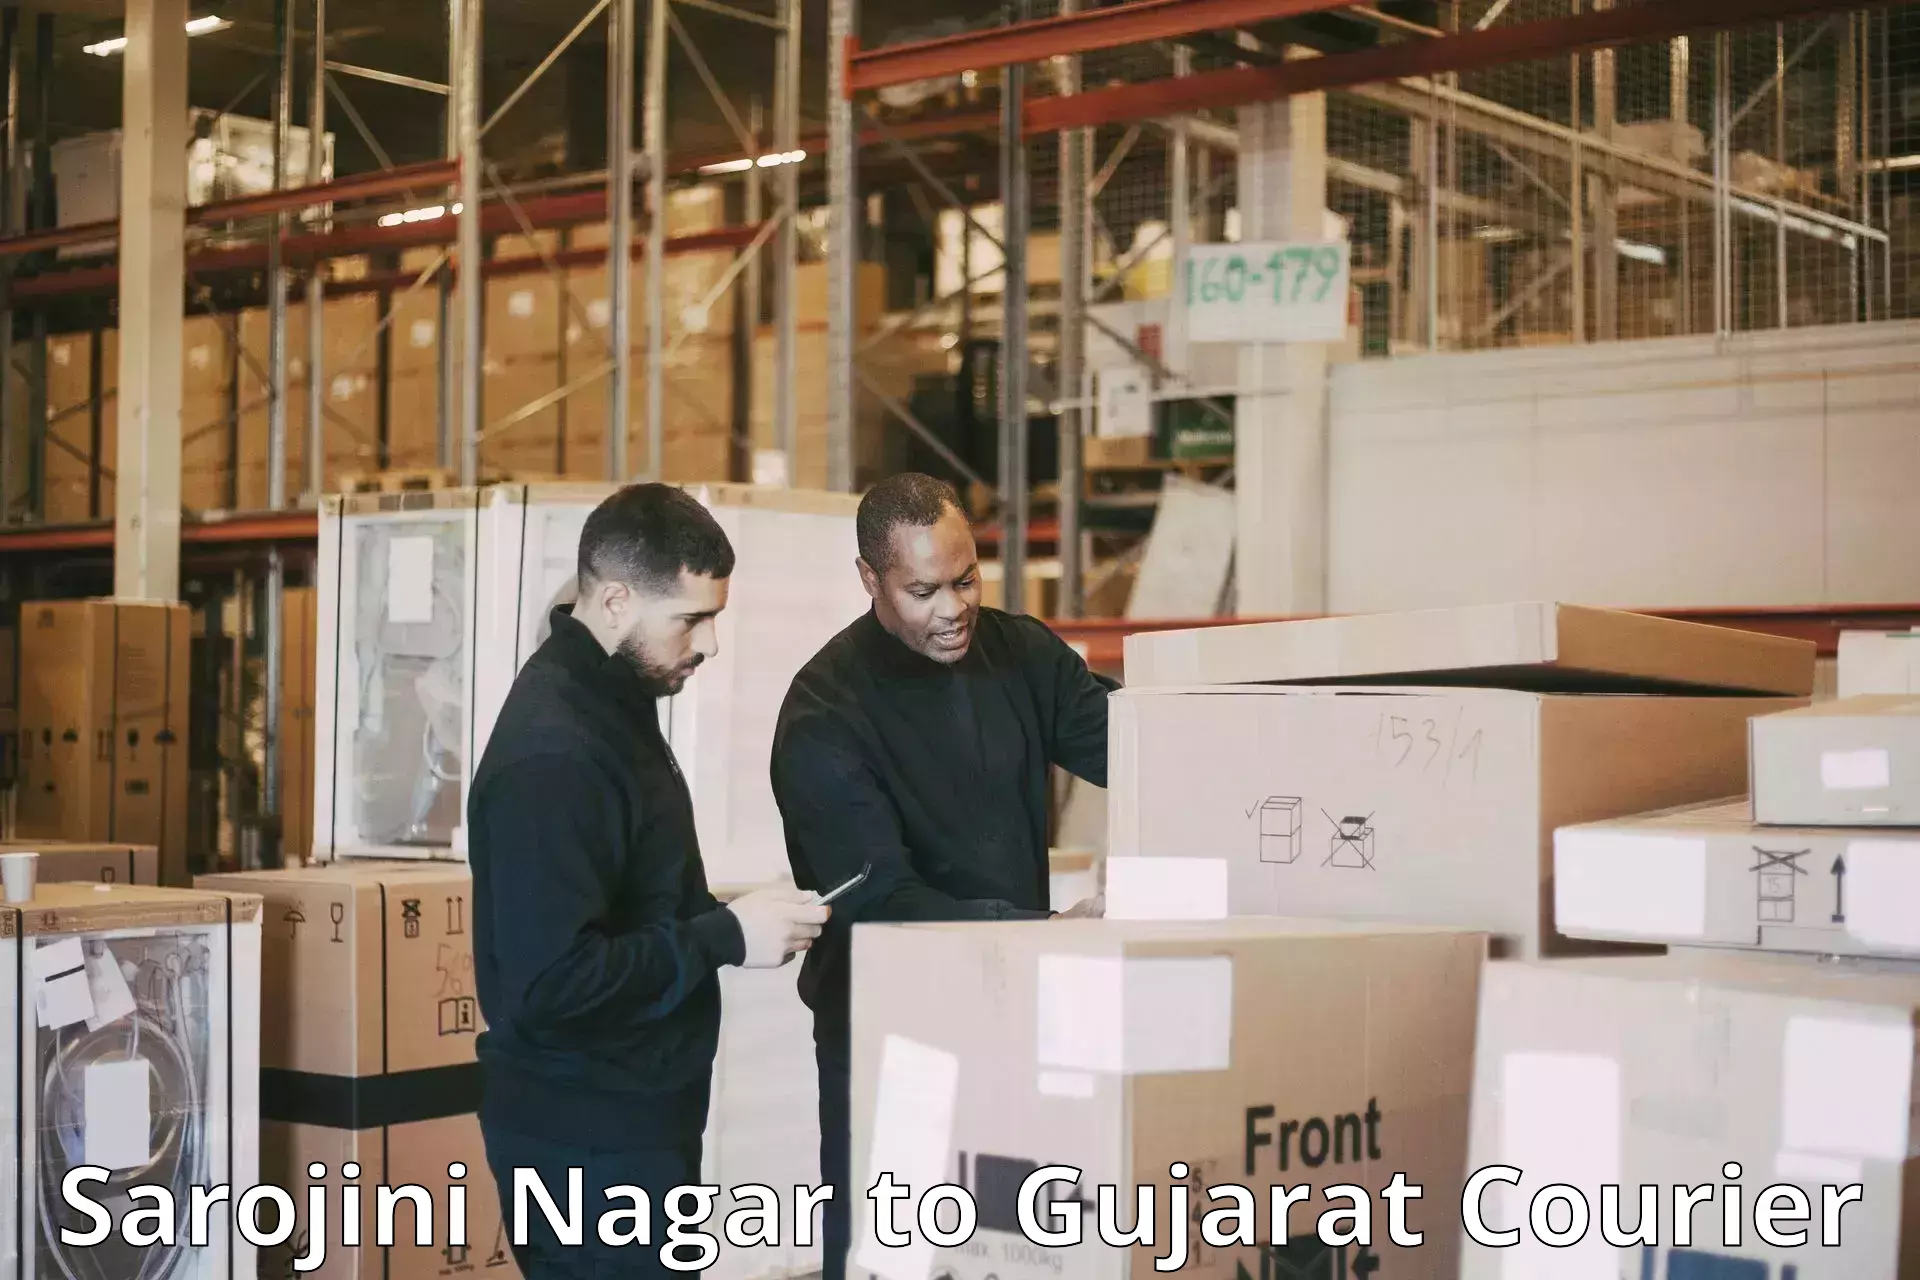 Courier service comparison Sarojini Nagar to Gujarat